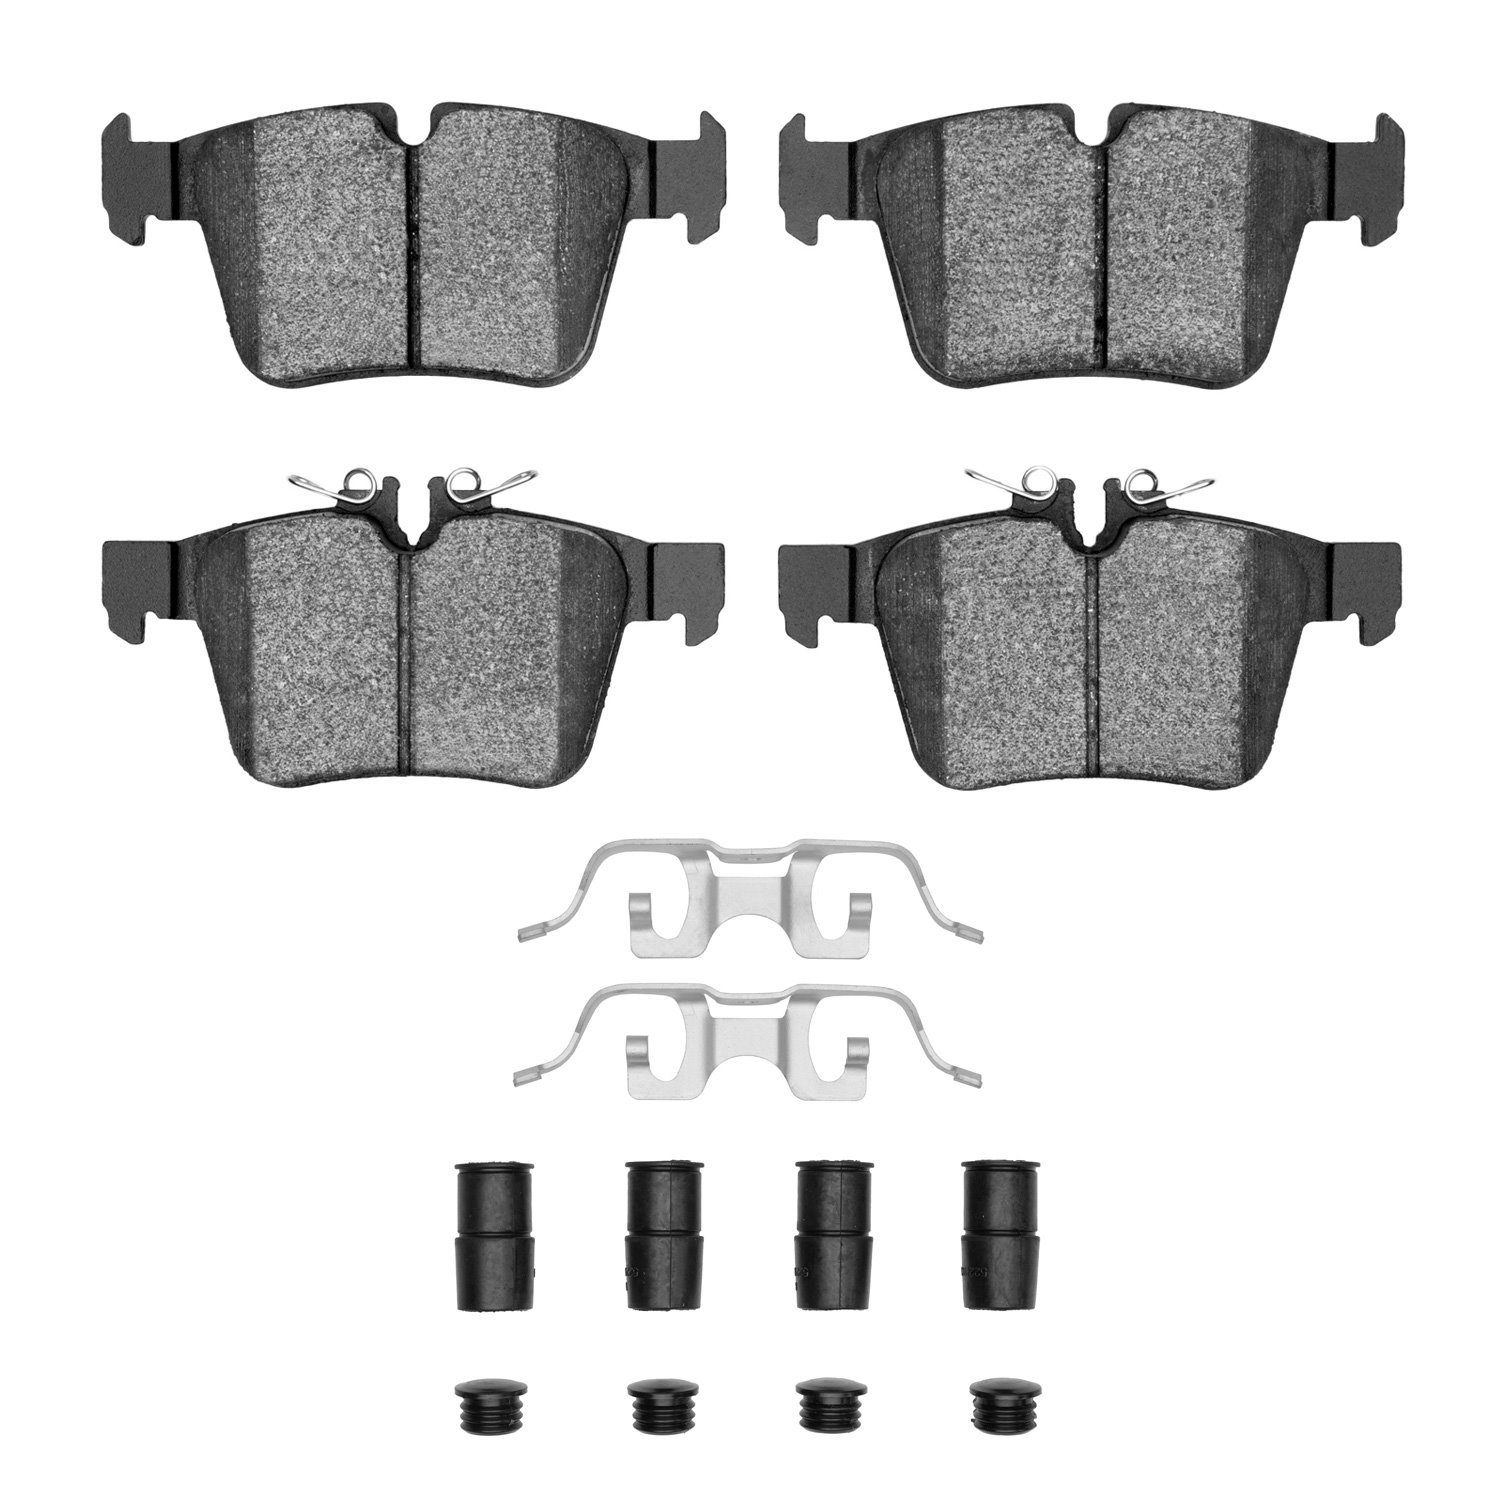 1600-1795-01 5000 Euro Ceramic Brake Pads & Hardware Kit, Fits Select Mercedes-Benz, Position: Rear